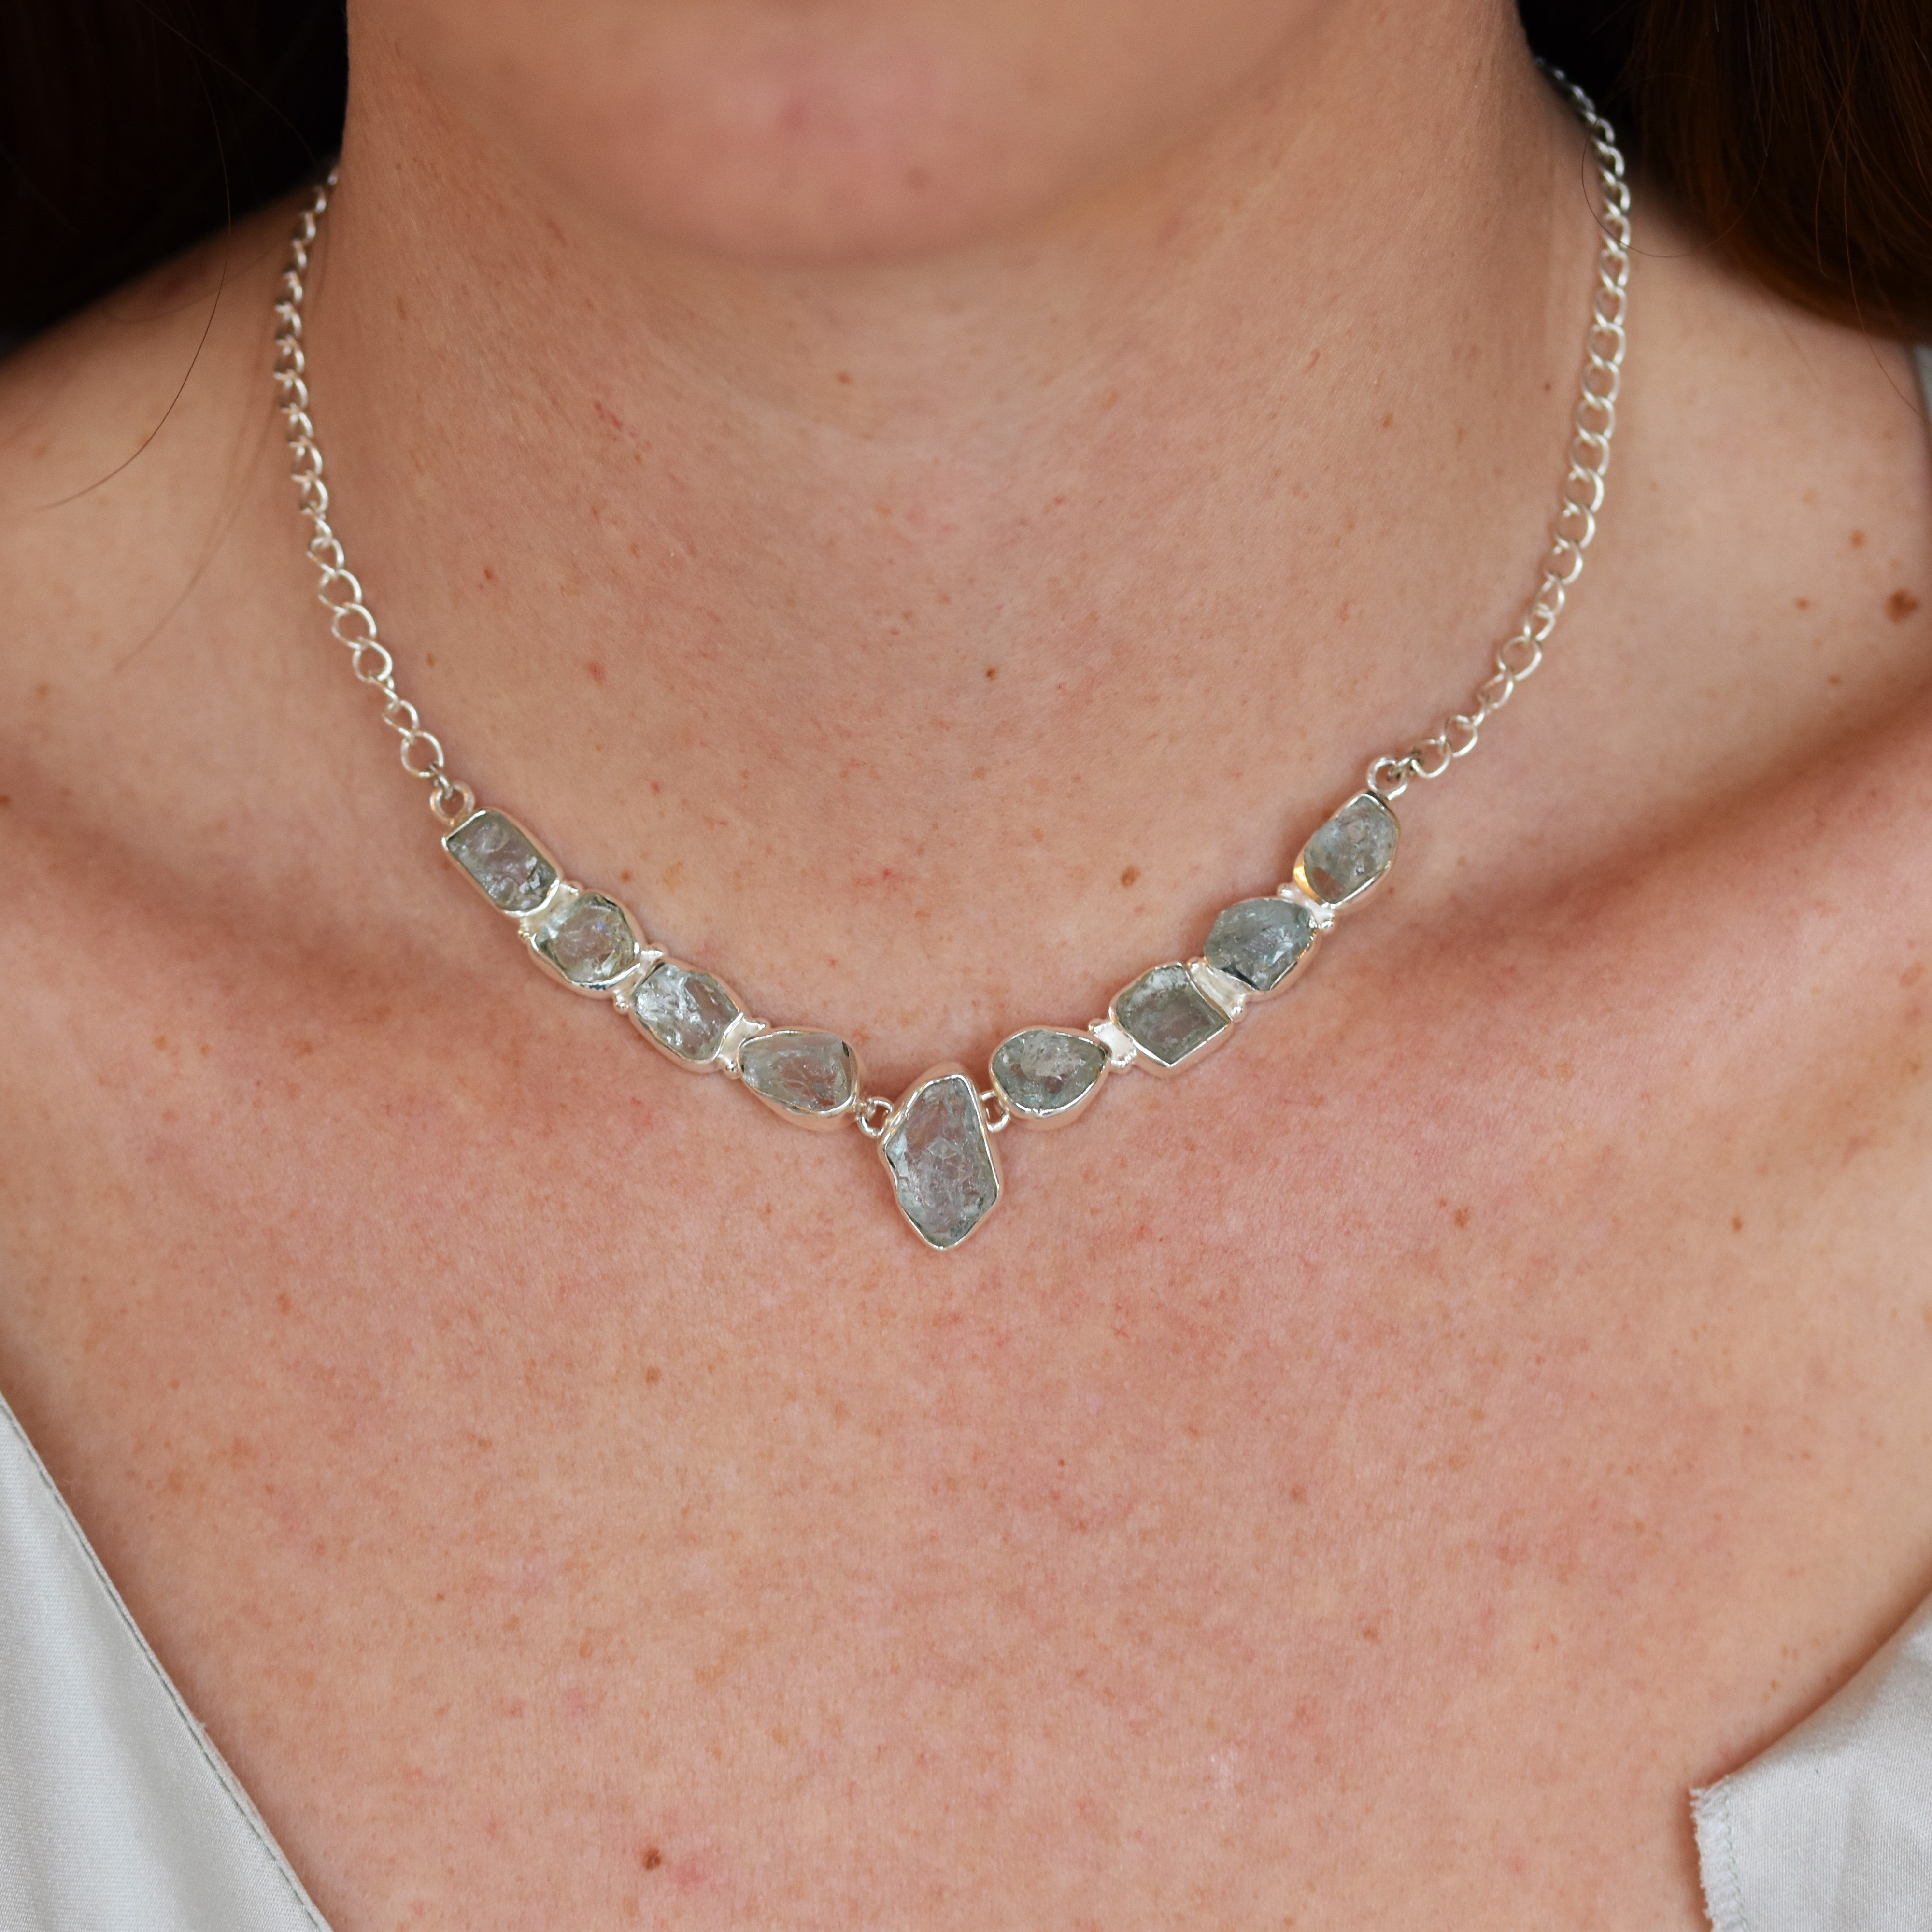 Celestine necklace